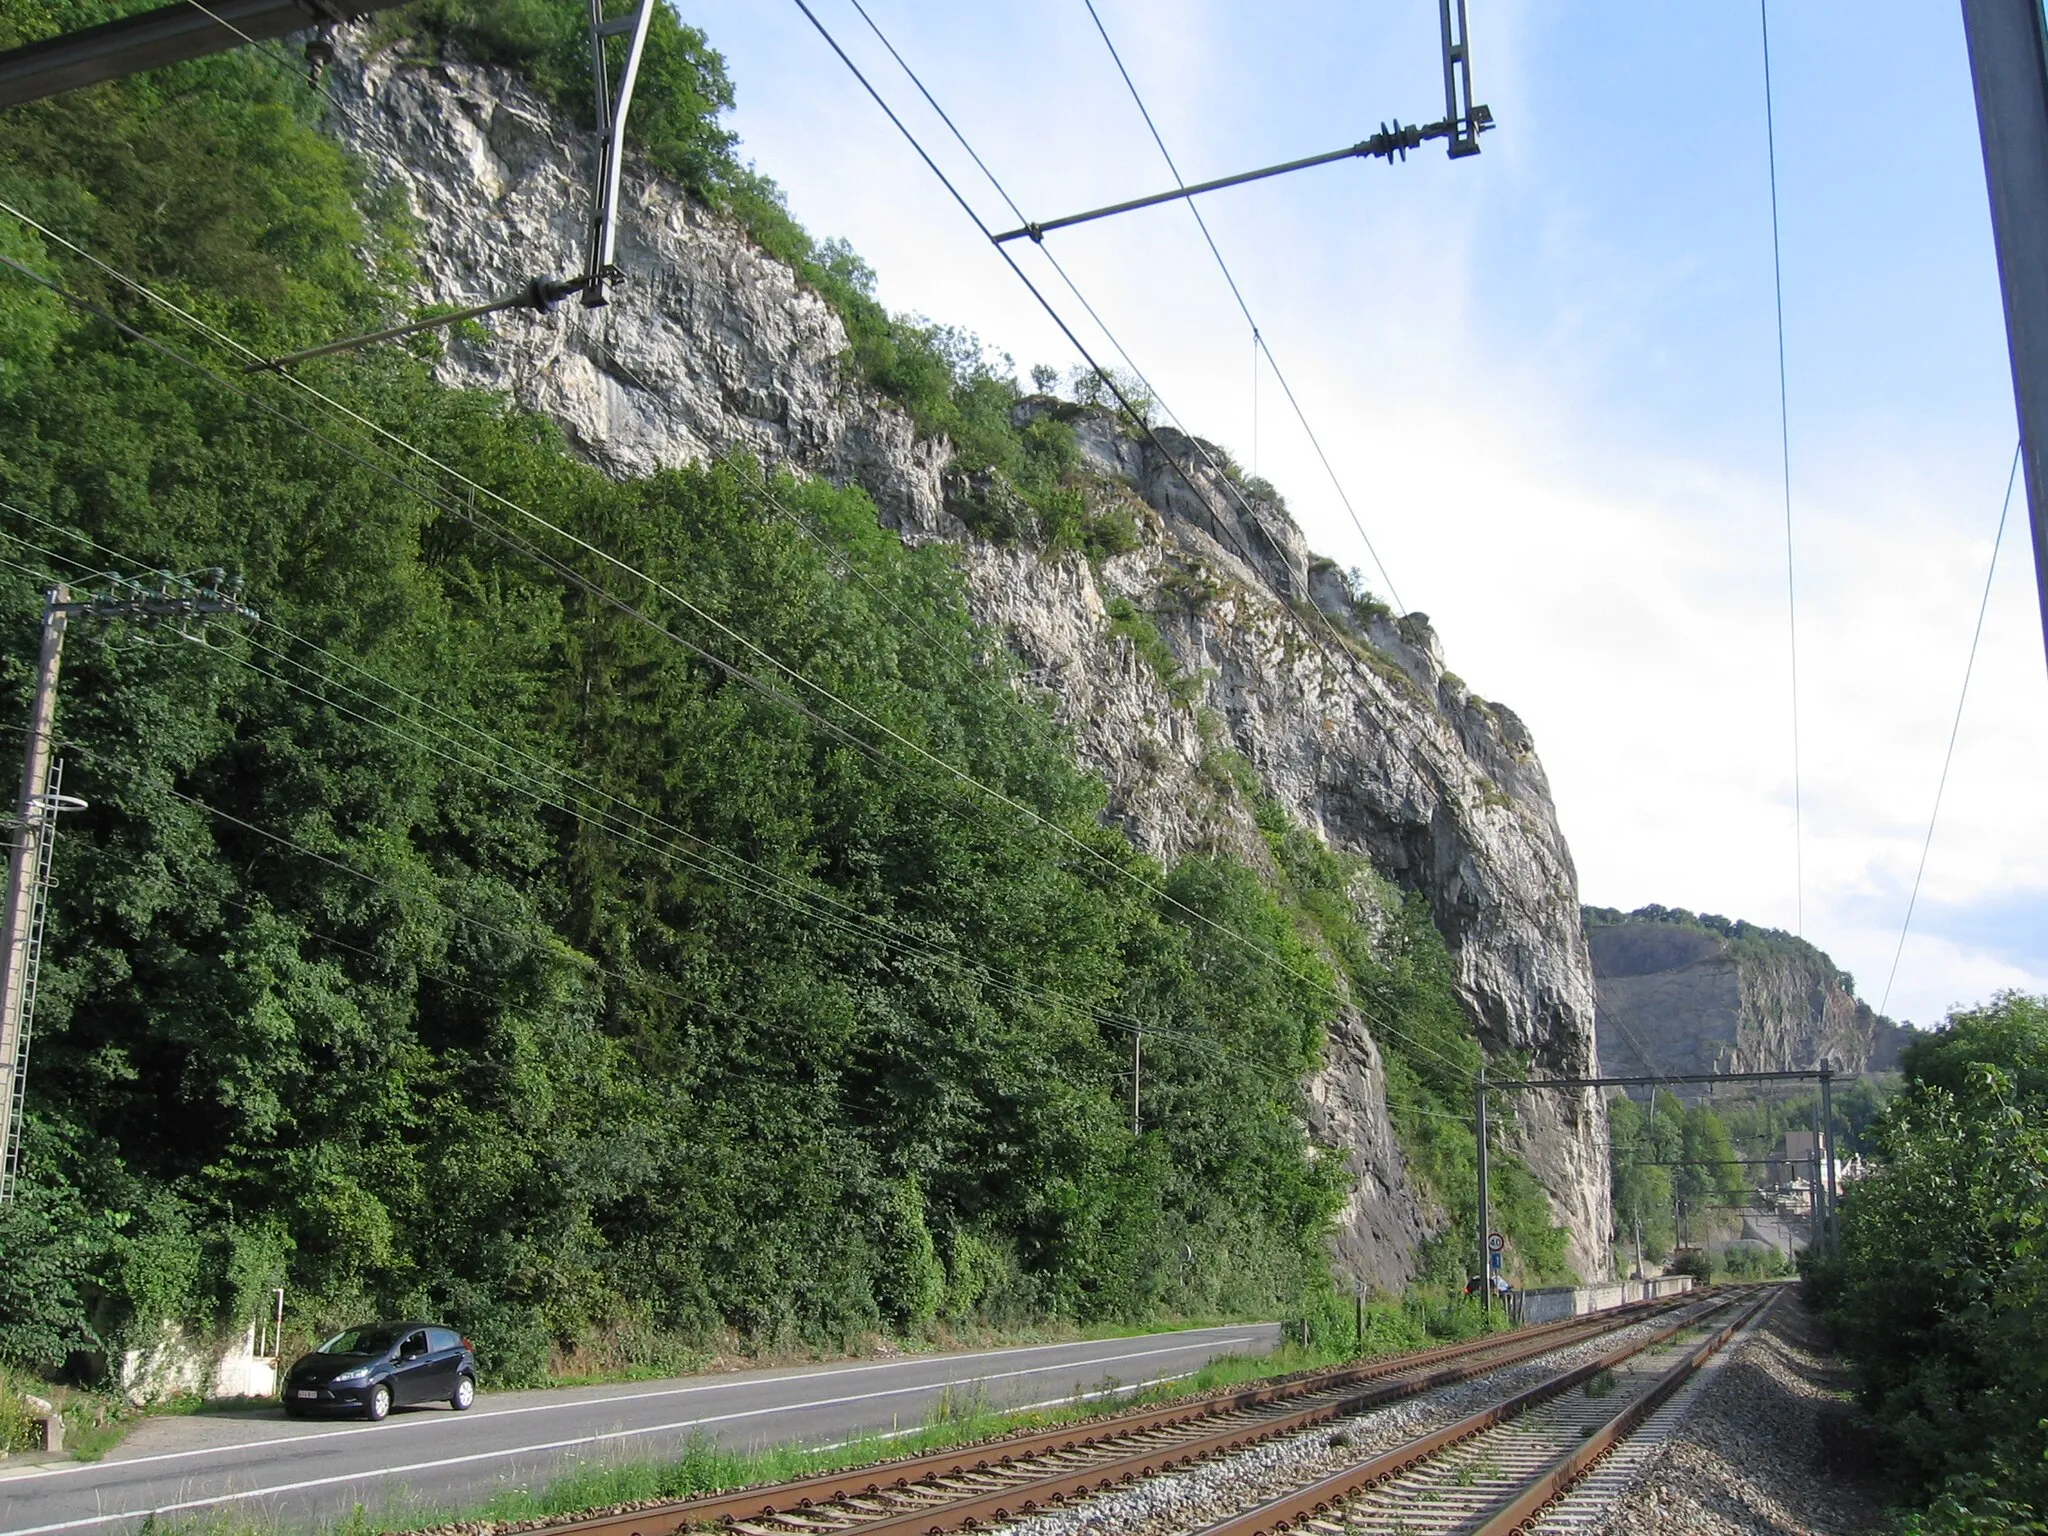 Photo showing: The Tailfer Rock with the Namur-Dinant railway line, at Tailfer, Lustin (near Namur, Belgium).